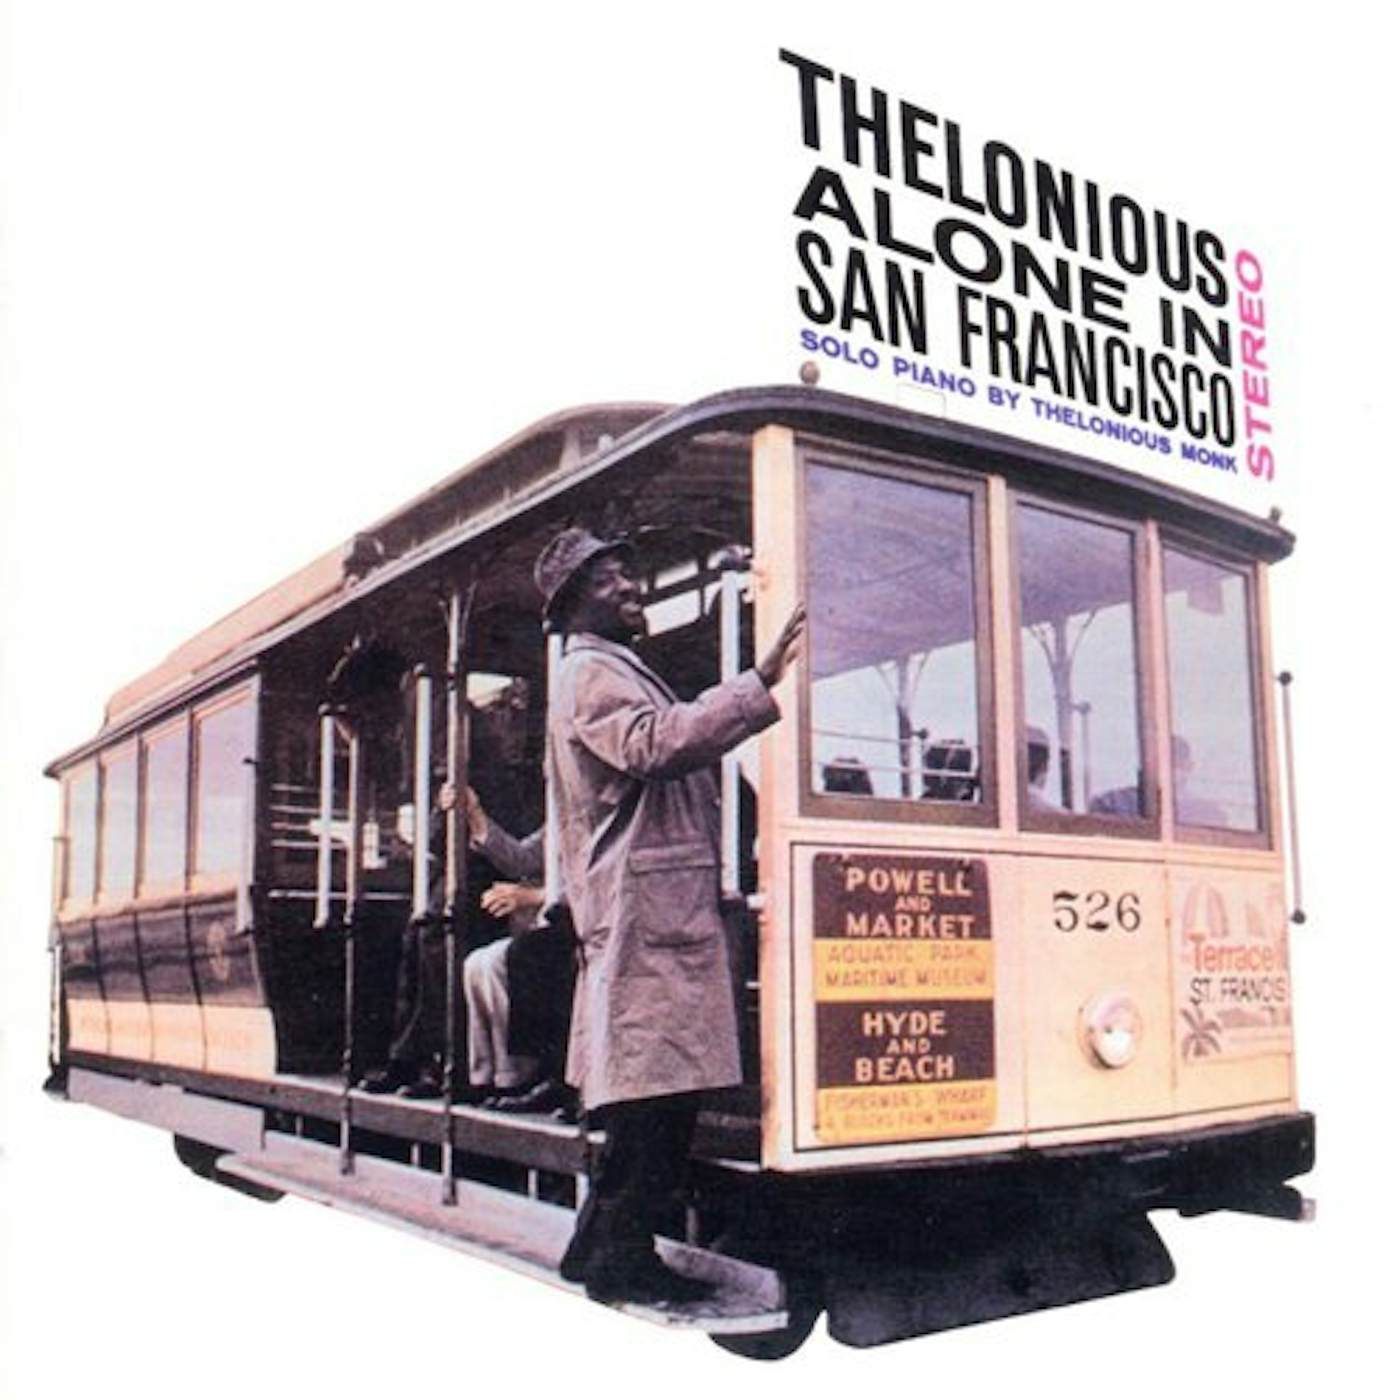 Thelonious Monk Thelonious Alone In San Francisco Vinyl Record